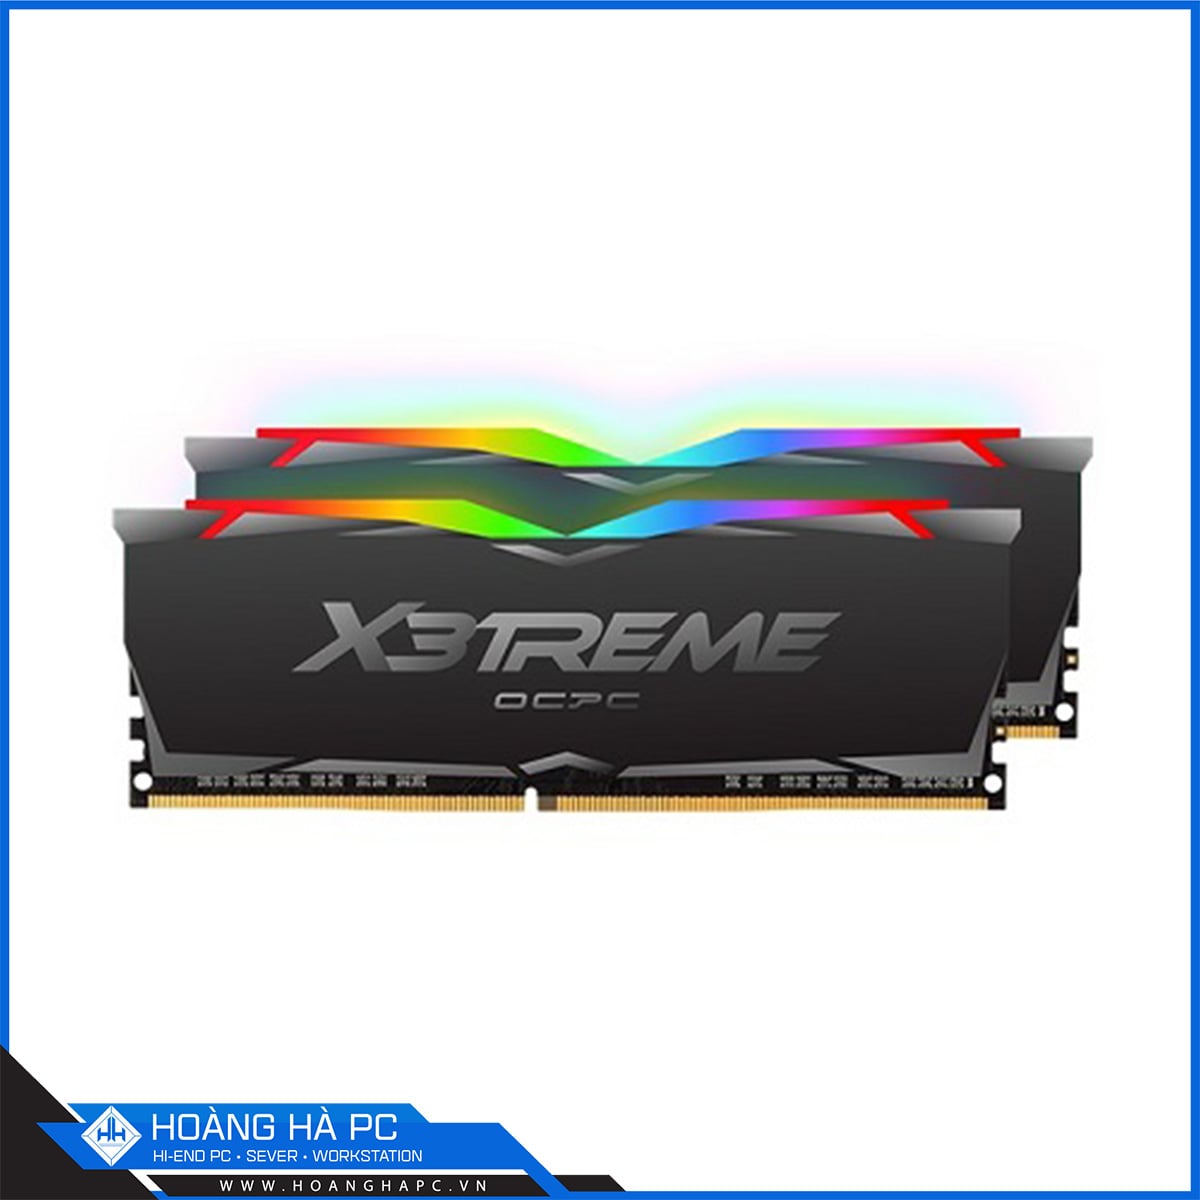 RAM OCPC X3TREME RGB AURA 32GB (2x16GB) DDR4 3200MHz Black